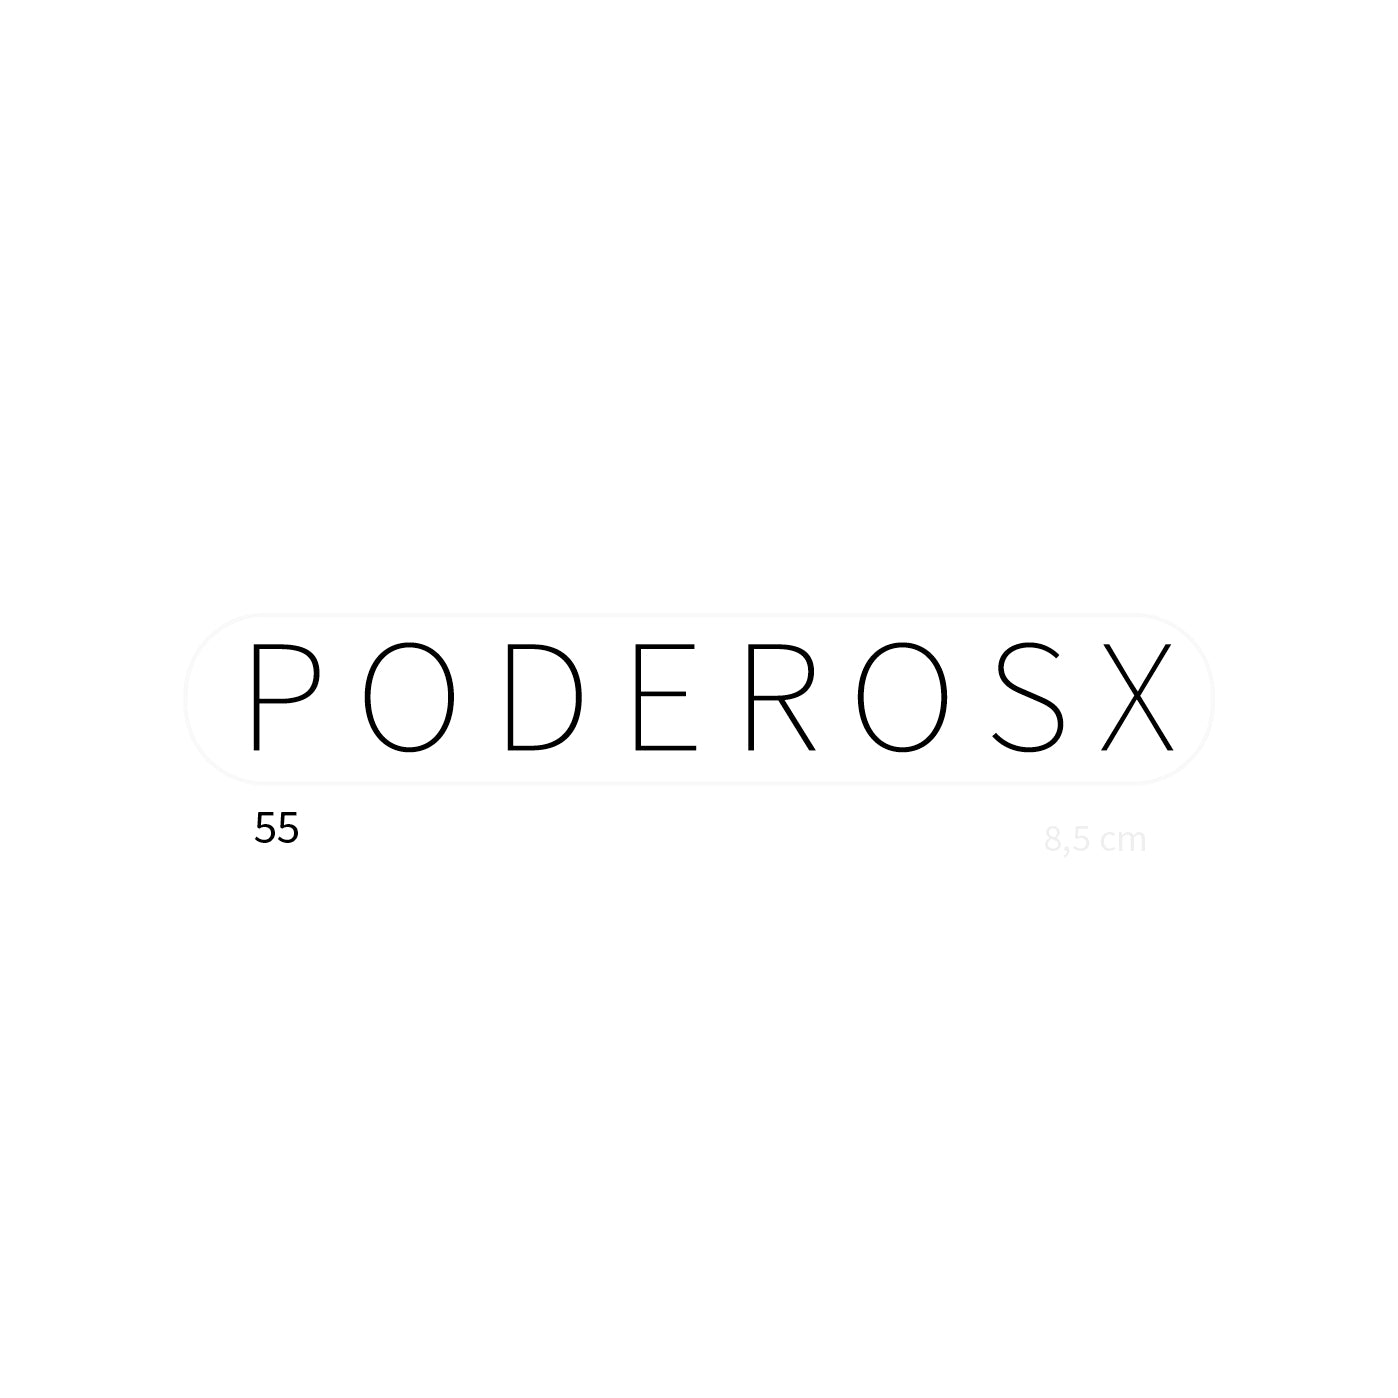 PODEROSX